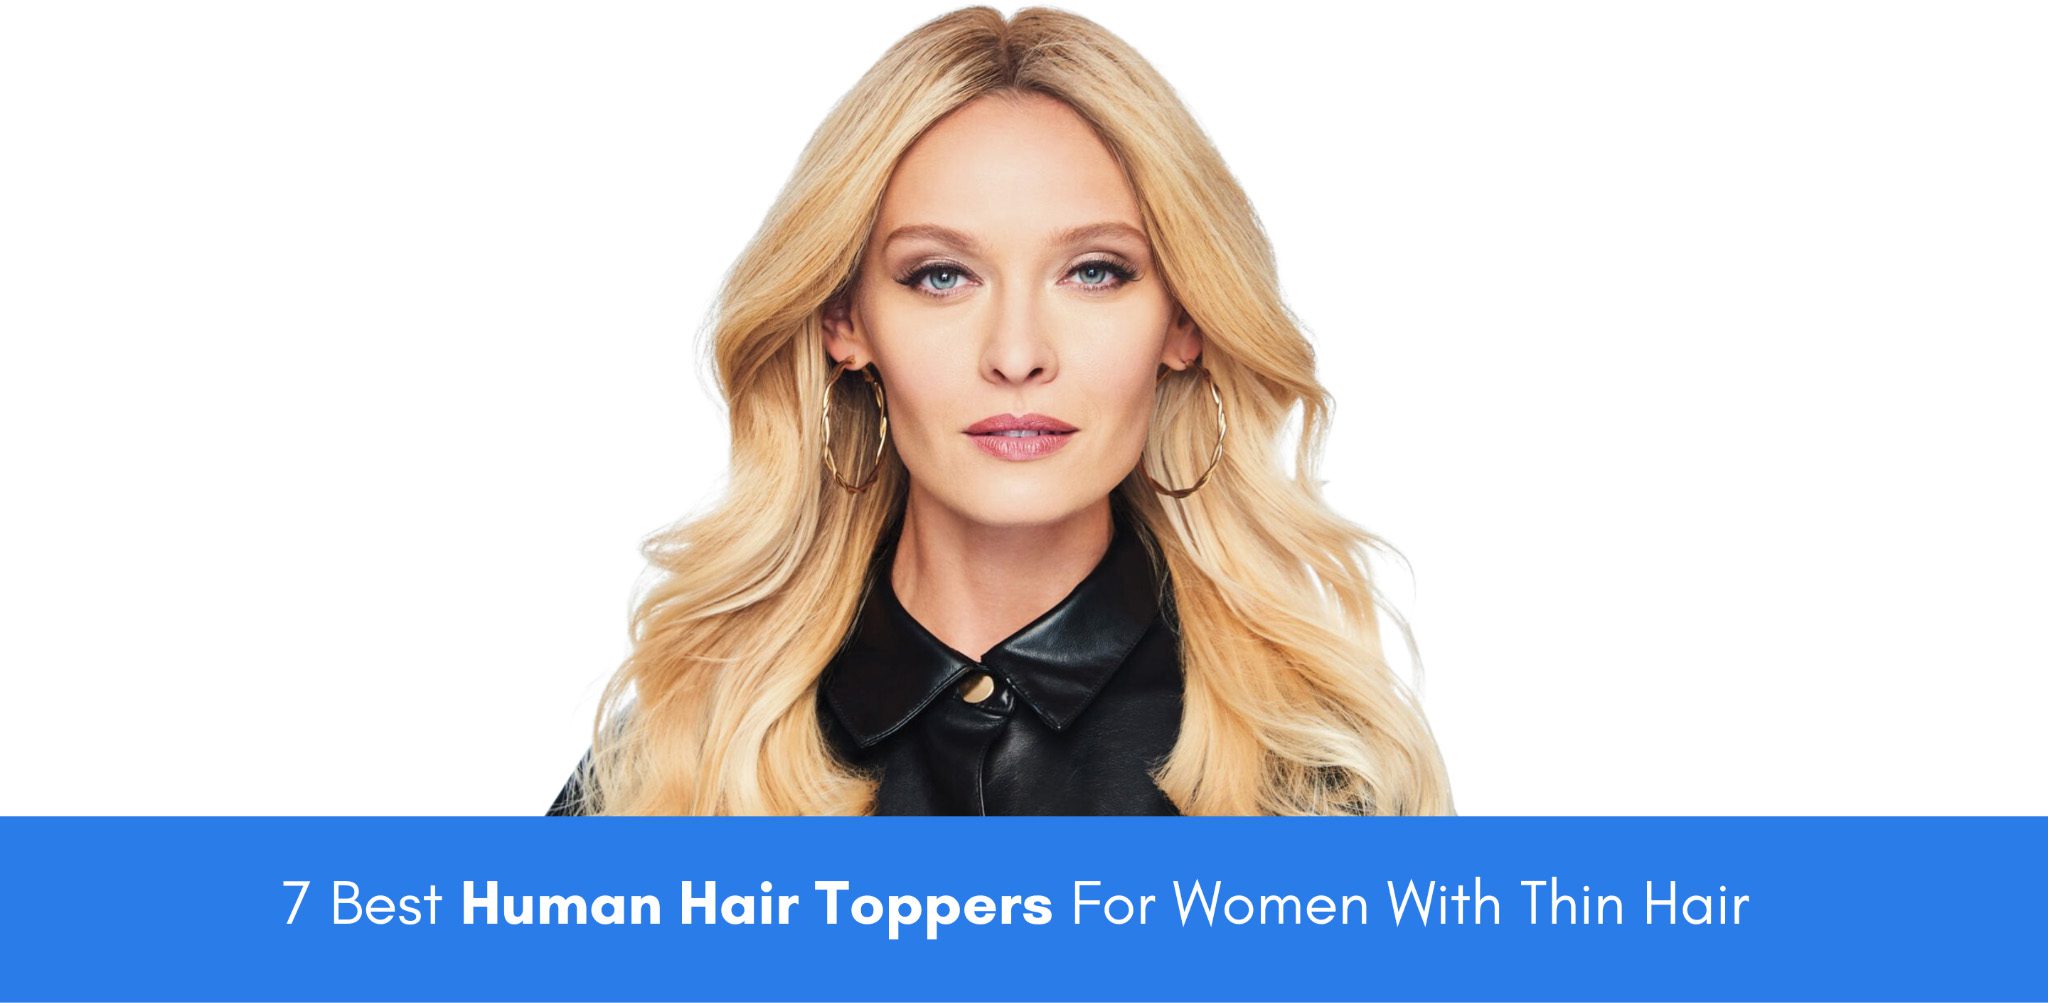 Human Hair Pieces, Human Hair Pieces For Thinning Hair